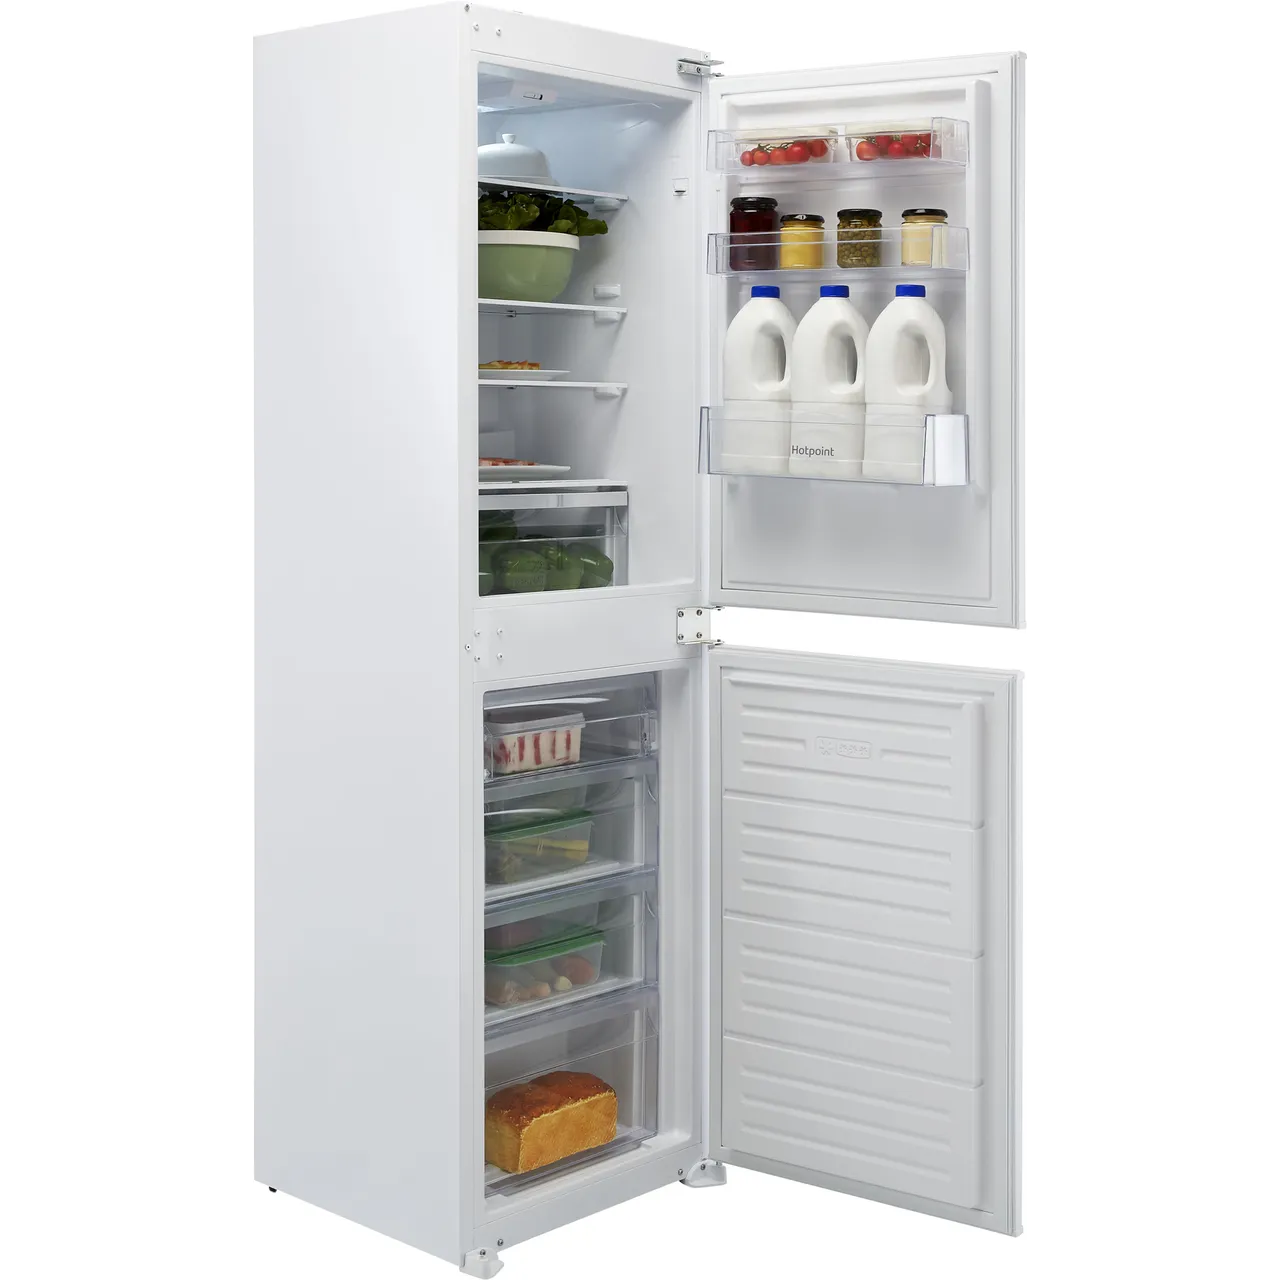 Refrigeration > Fridge Freezers